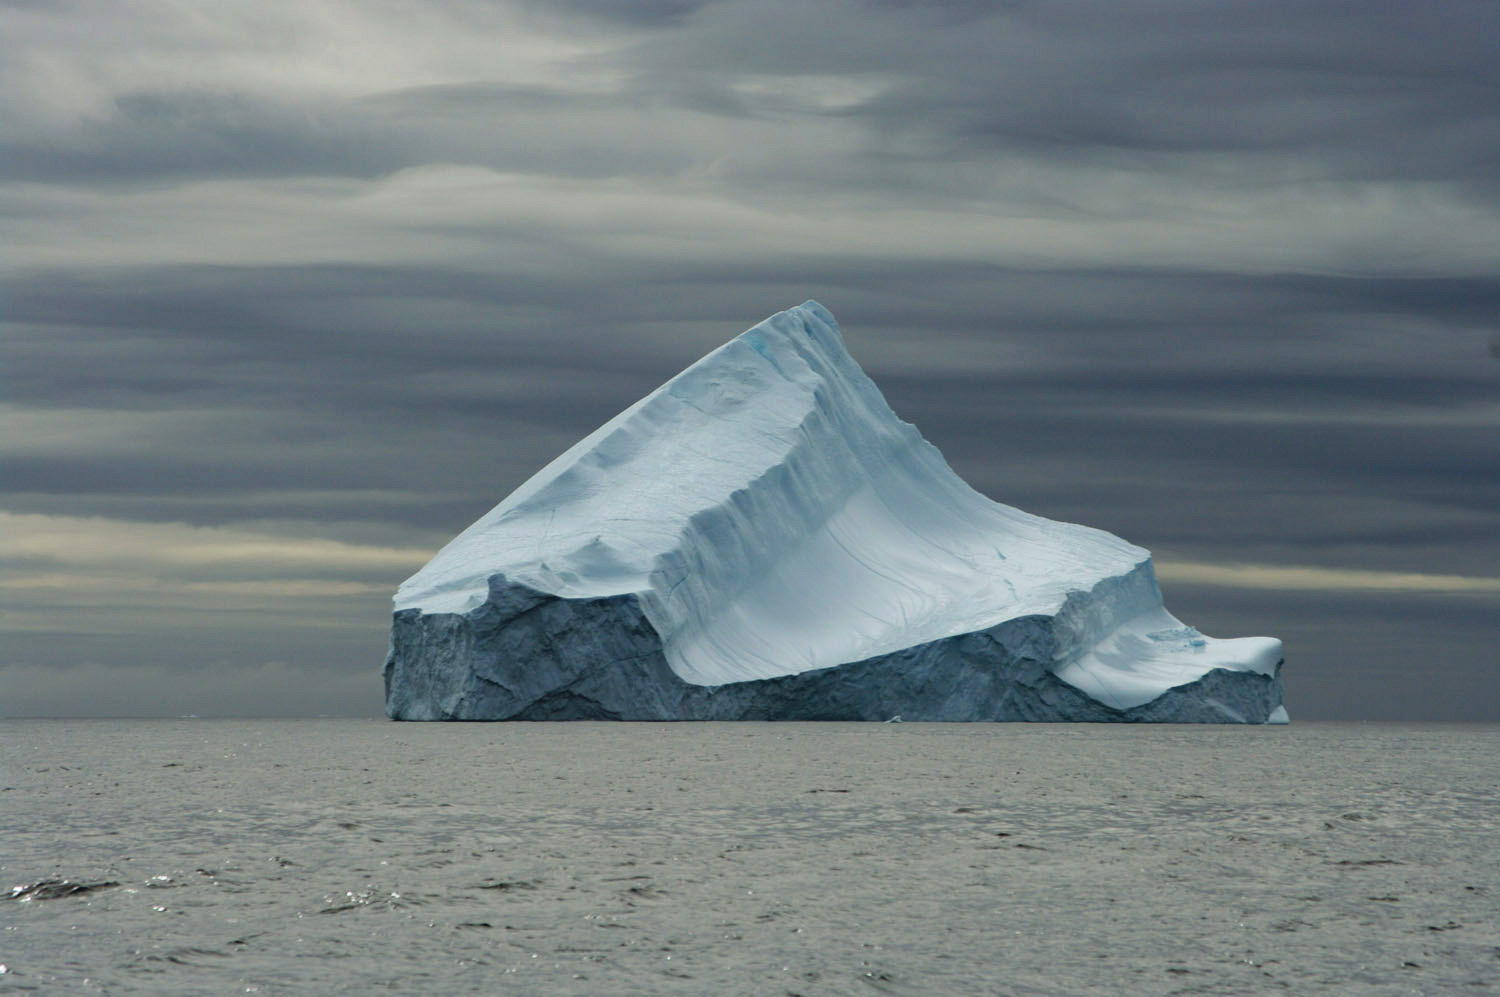 Iceberg 3 - East Greenland, greenland, travel